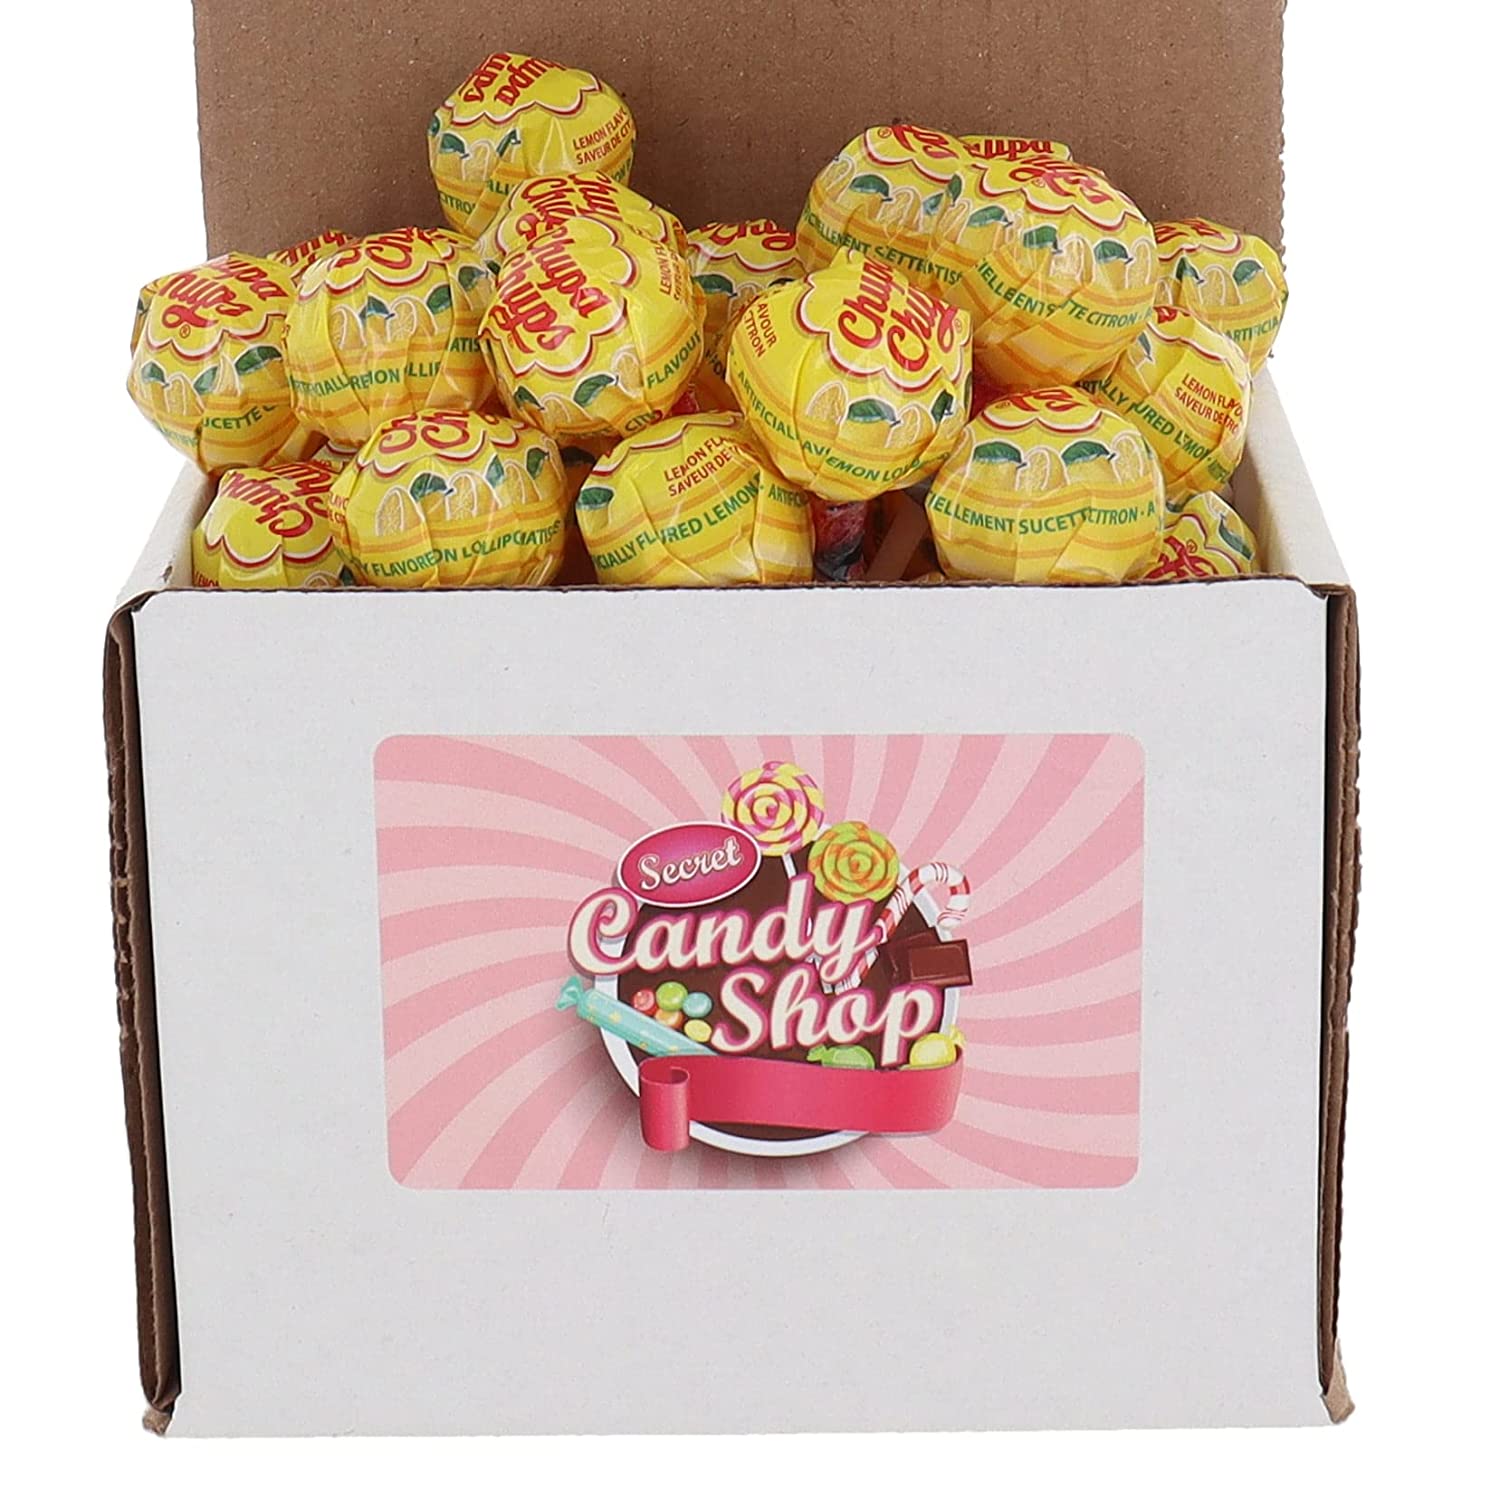 Chupa Chups Strawberry Love Lollipops - Economy Candy